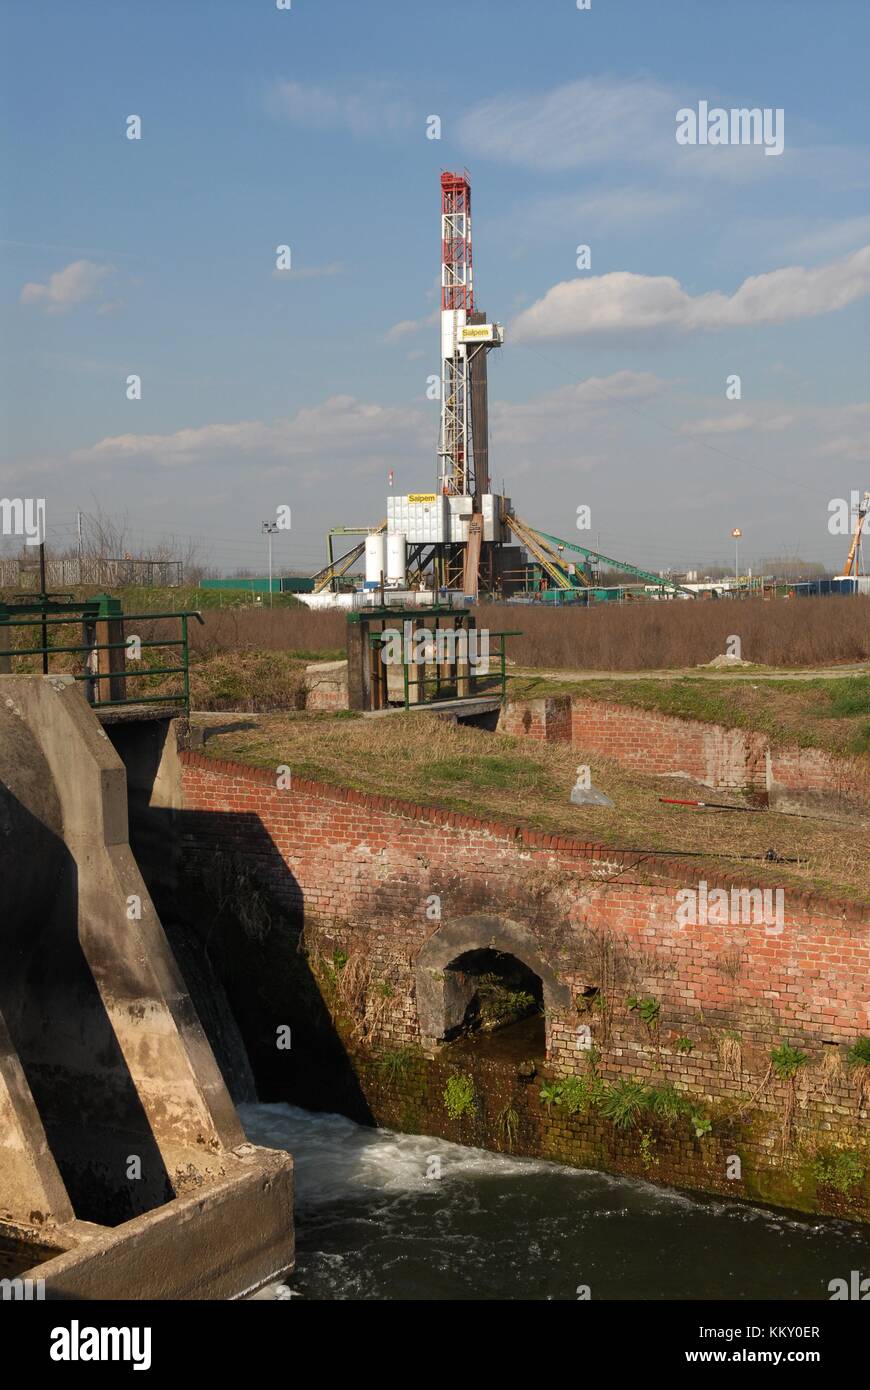 SAIPEM oil well and drill at Trecate (Novara, Italy)) Stock Photo